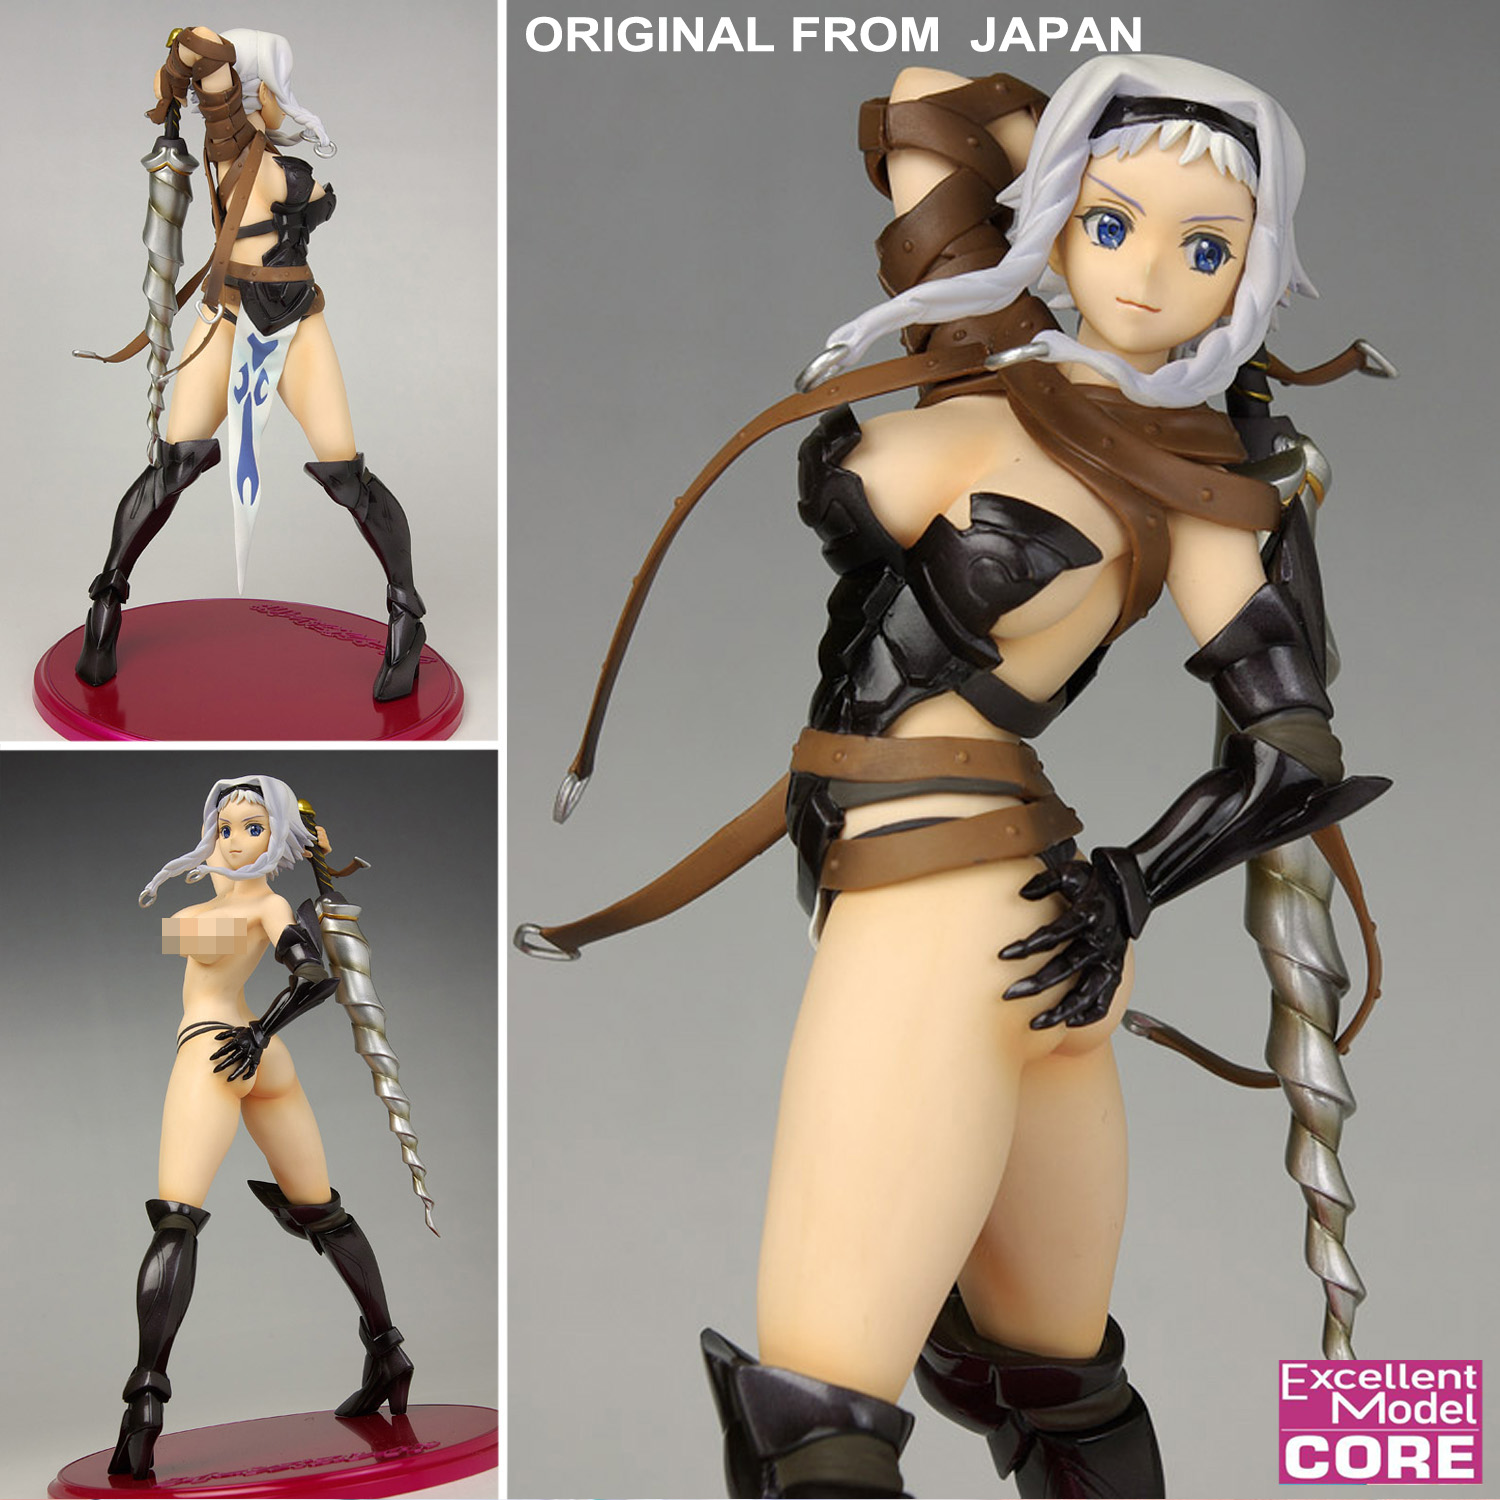 Model โมเดล ของแท้ 100% MegaHouse Excellent Model CORE จาก Queen's Blade ควีนส์เบลด ควีนเบลด Leina Reina Maria เรนะ 2P 1/8 Exiled Warrior Ver Original from Japan Figure ฟิกเกอร์ Anime ของขวัญ อนิเมะ การ์ตูน ตุ๊กตา คอลเลกชัน สั่งและนำเข้าจากญี่ปุ่น manga